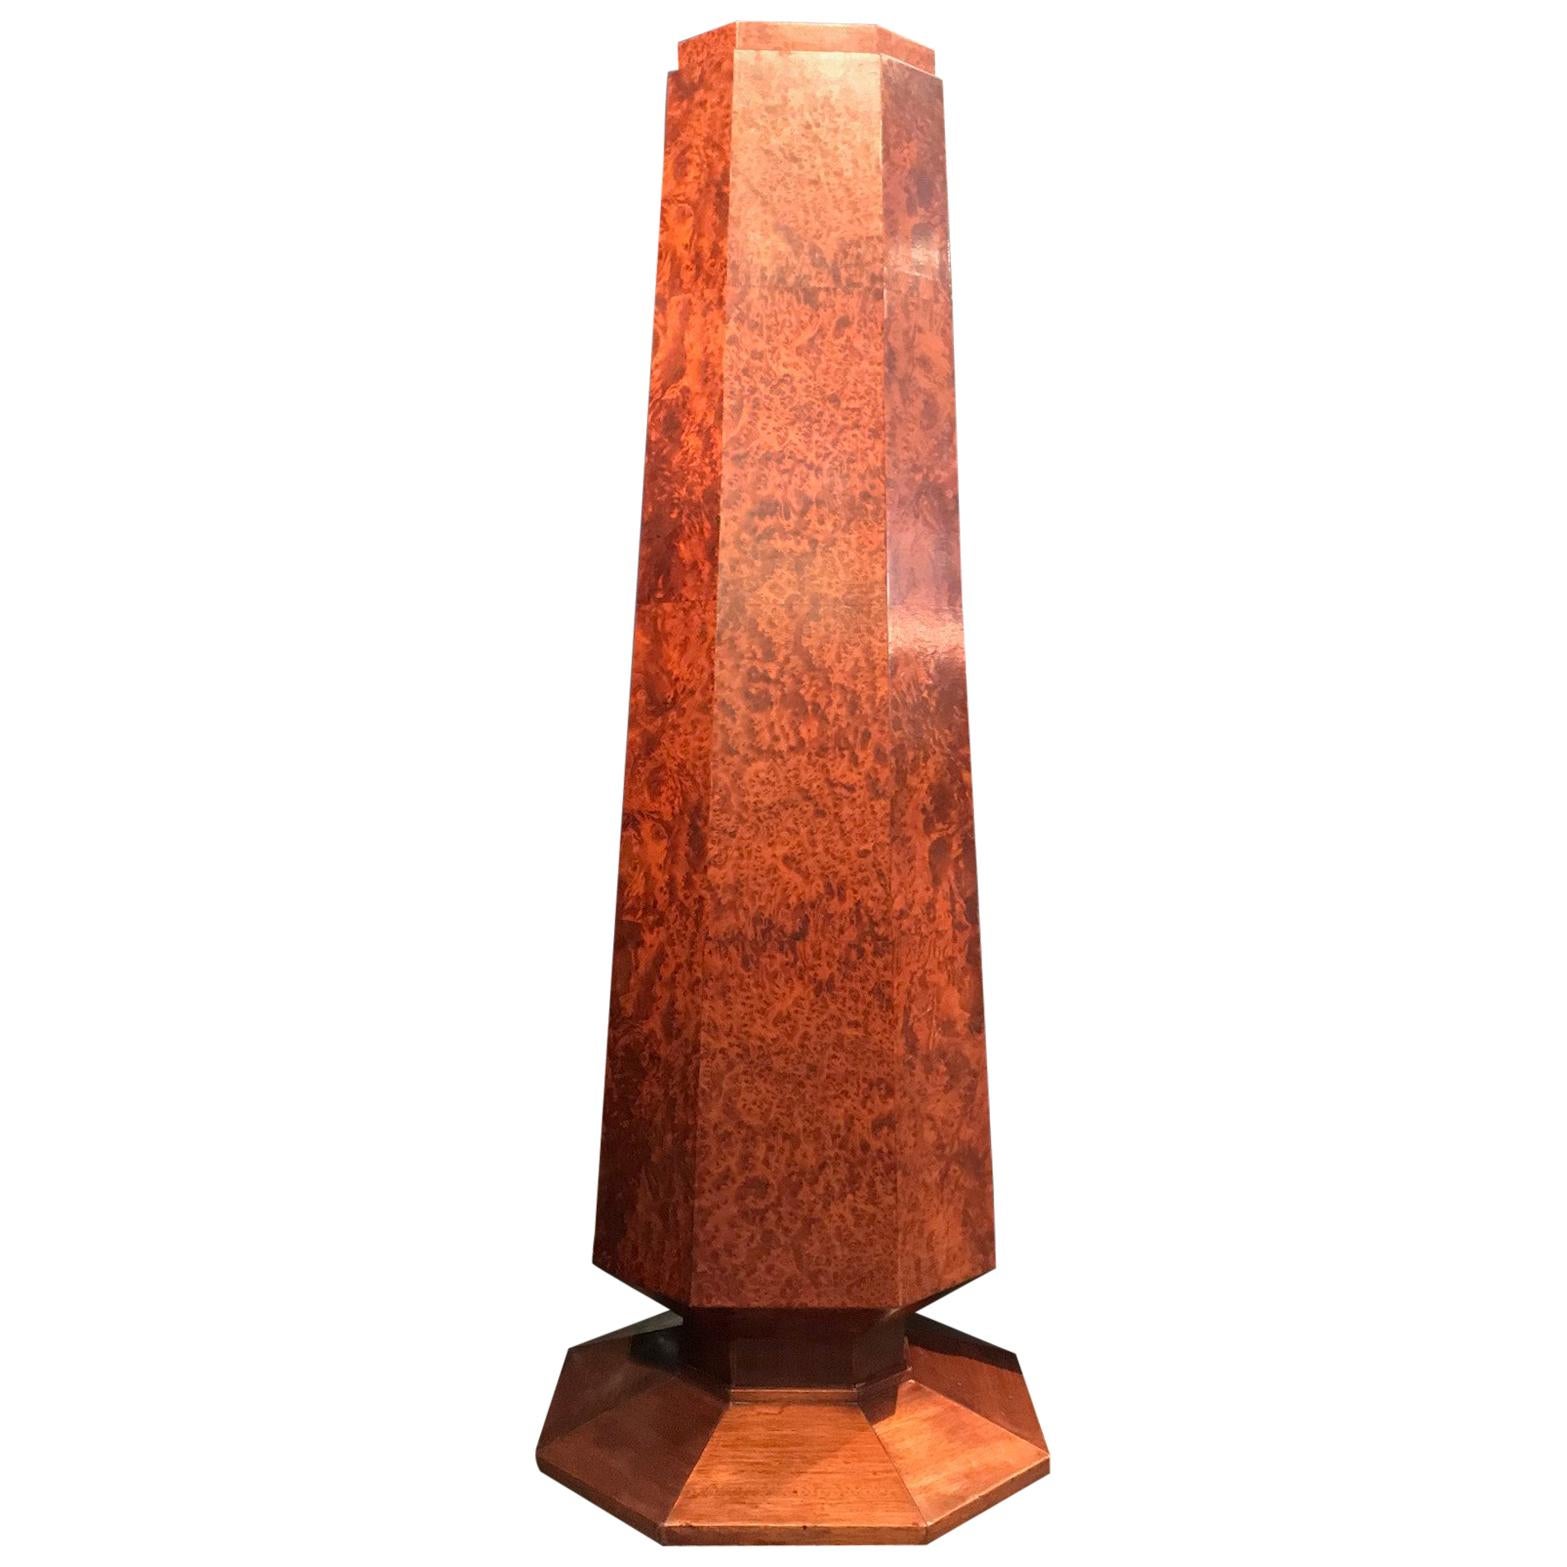 Elegant French Art Deco Period Burled Wood Pedestal For Sale